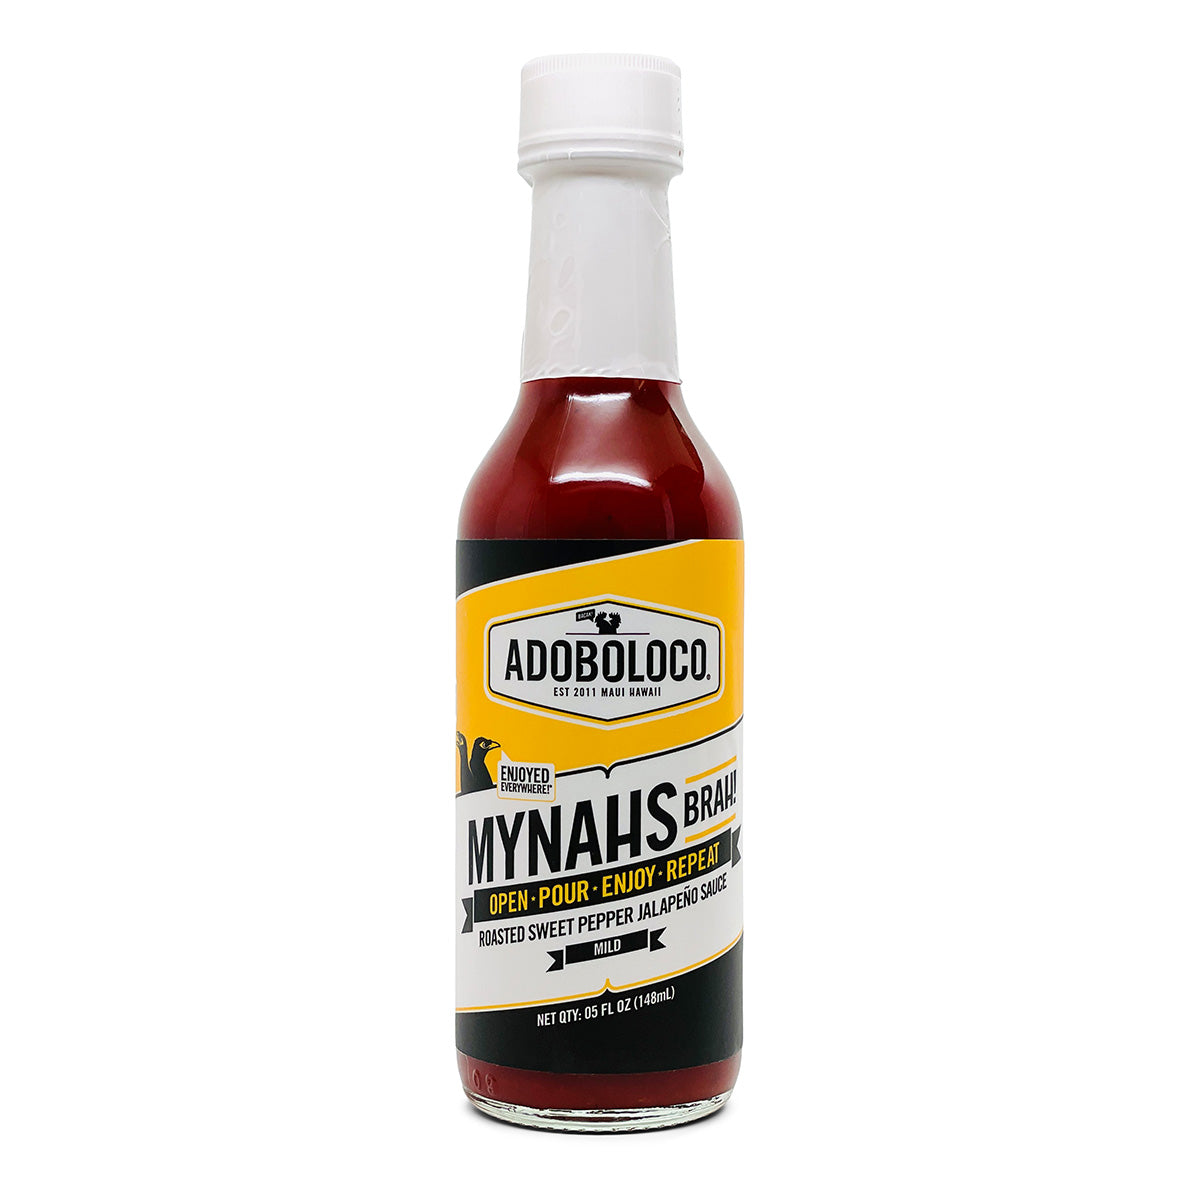 Adoboloco - MYNAHS BRAH! Hot Sauce